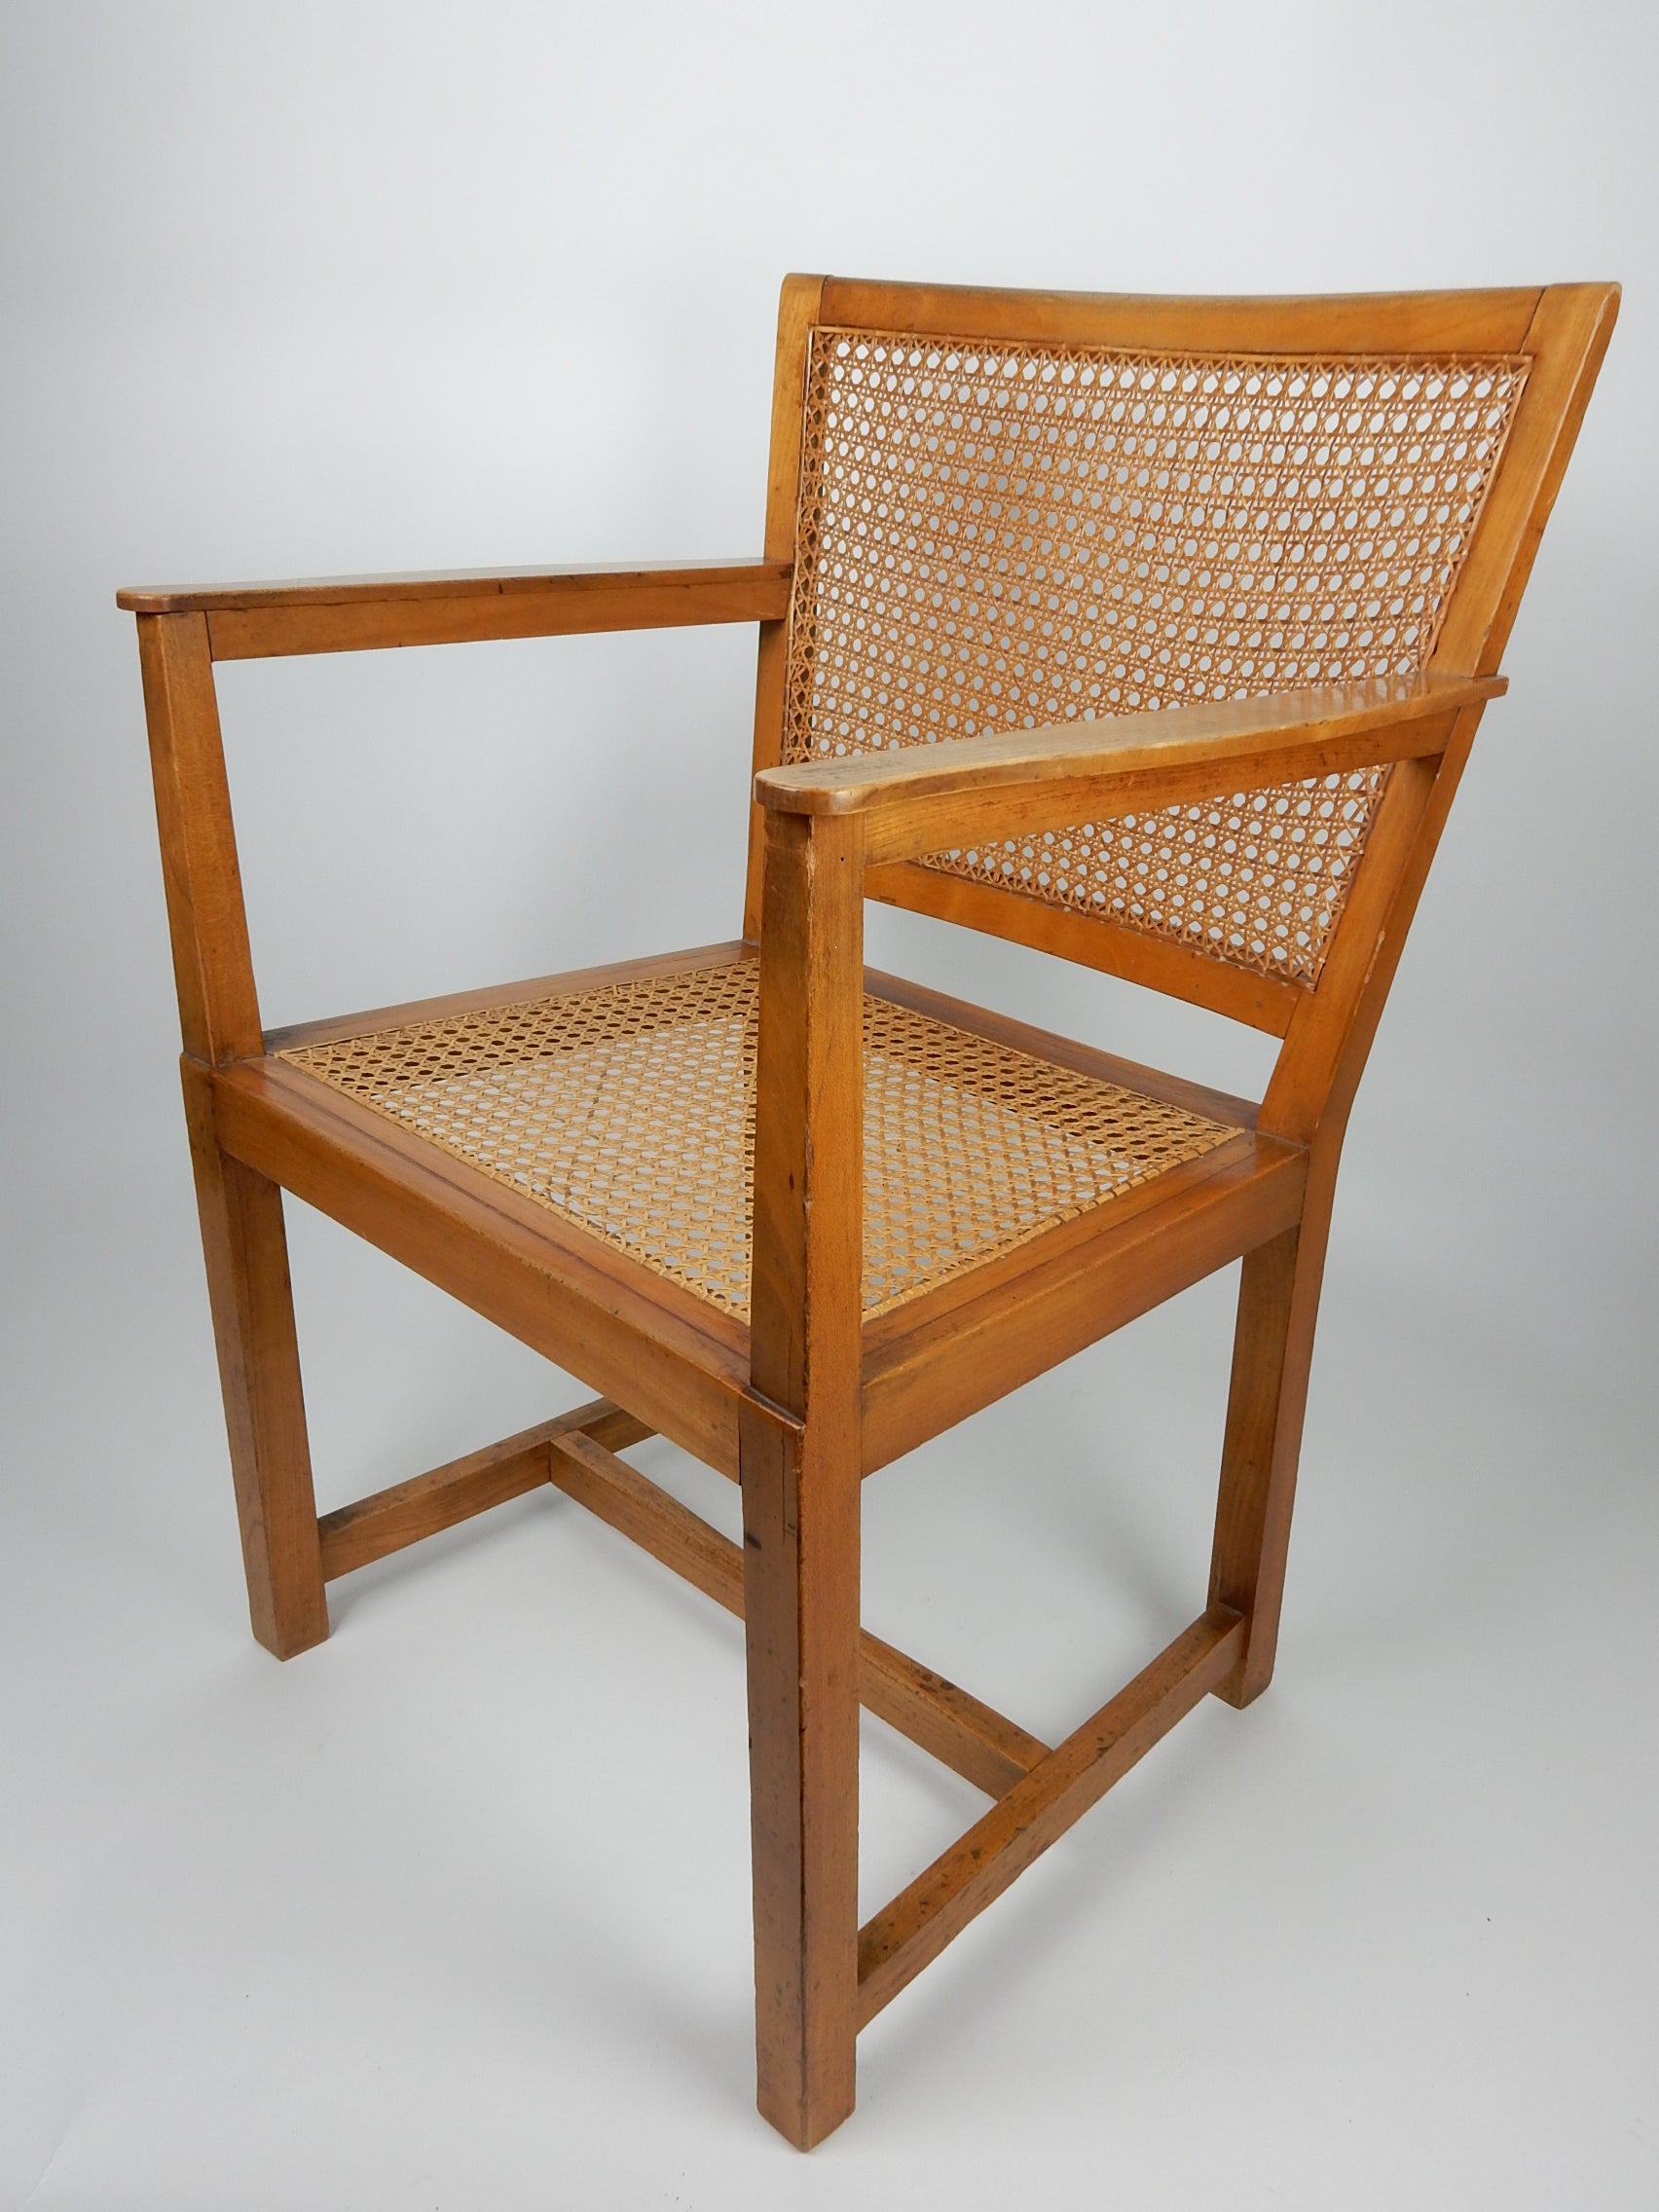 Architect Oskar Strnad 1879-1935 Pine & Cane Arm Chair 1920's Art Deco For Sale 1